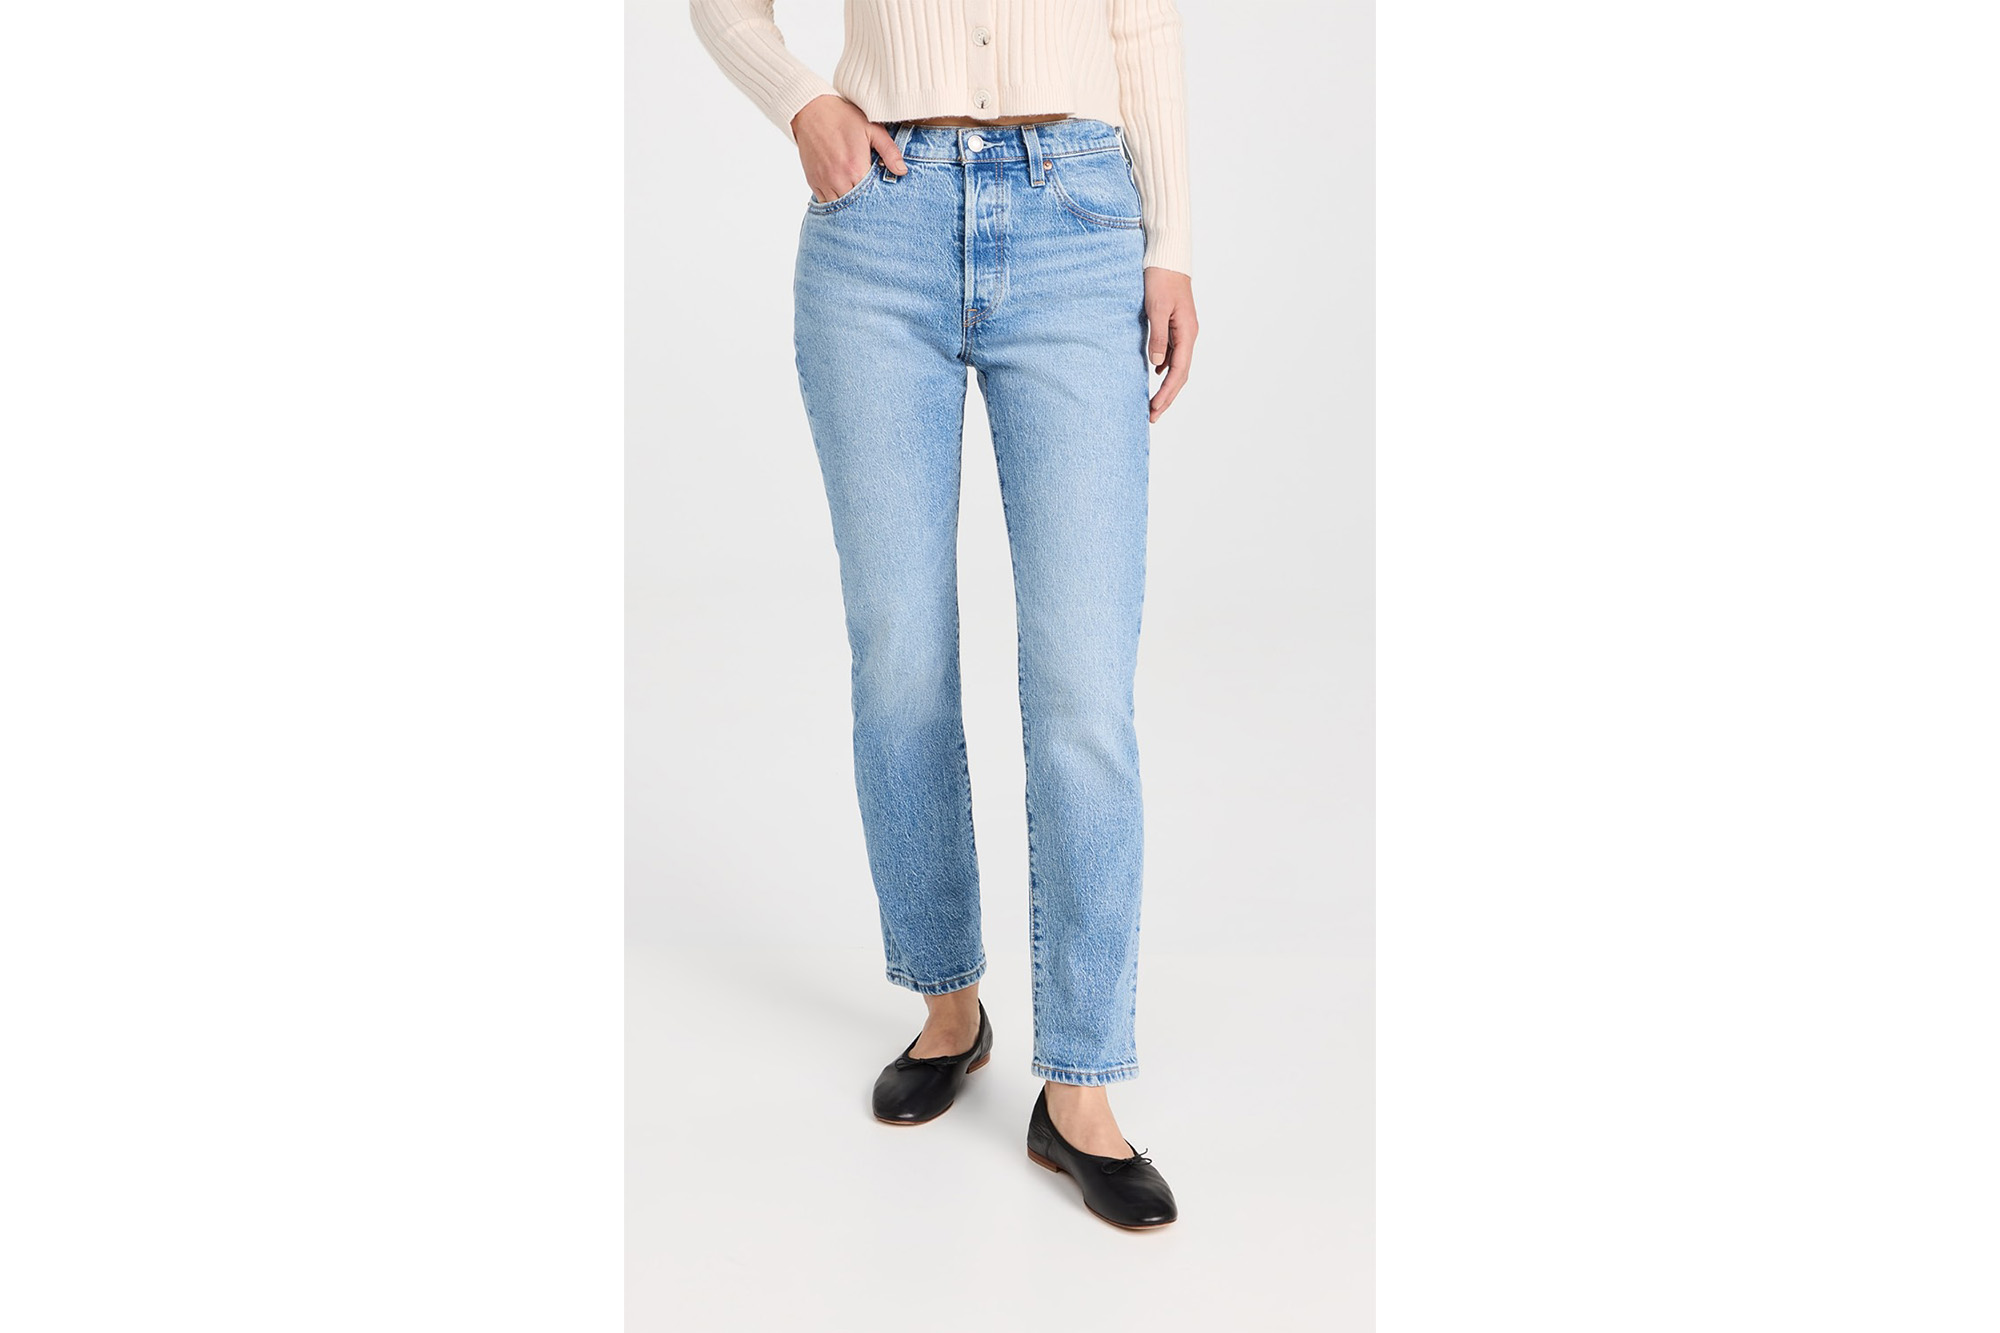 A model in jeans